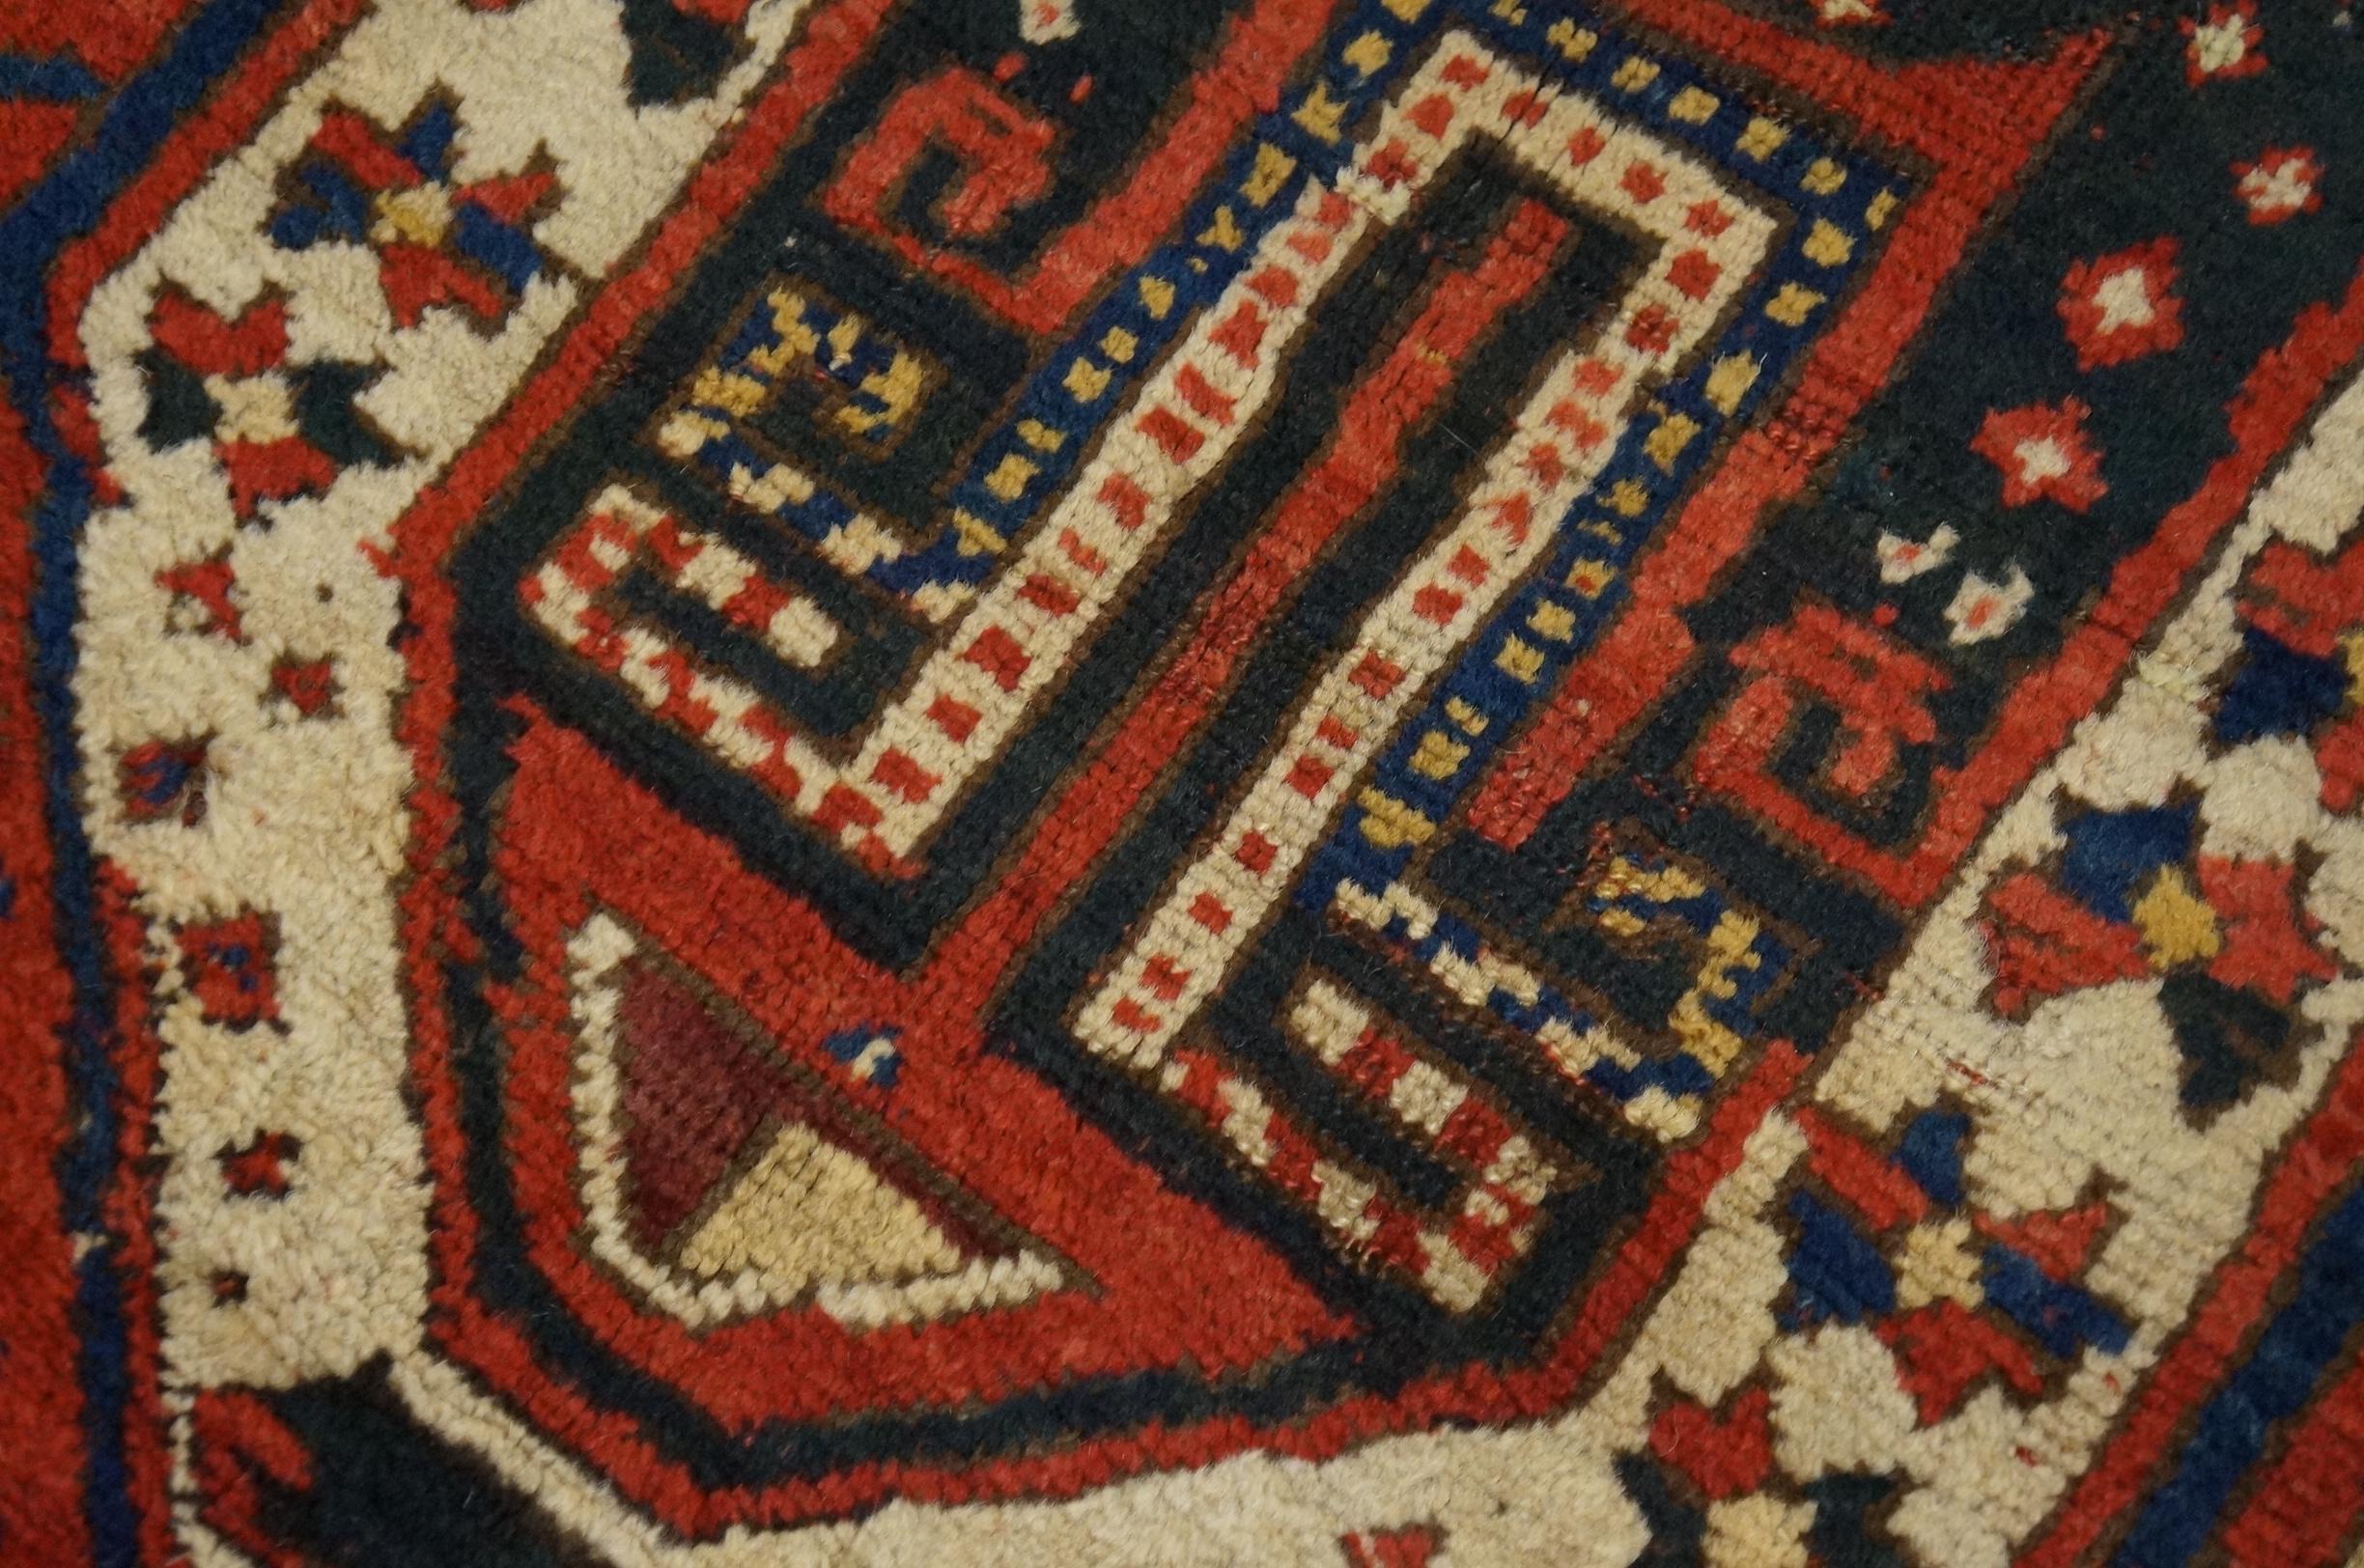 Kaukasischer Sewan-Kaukasischer Teppich aus dem 19. Jahrhundert ( 5'10